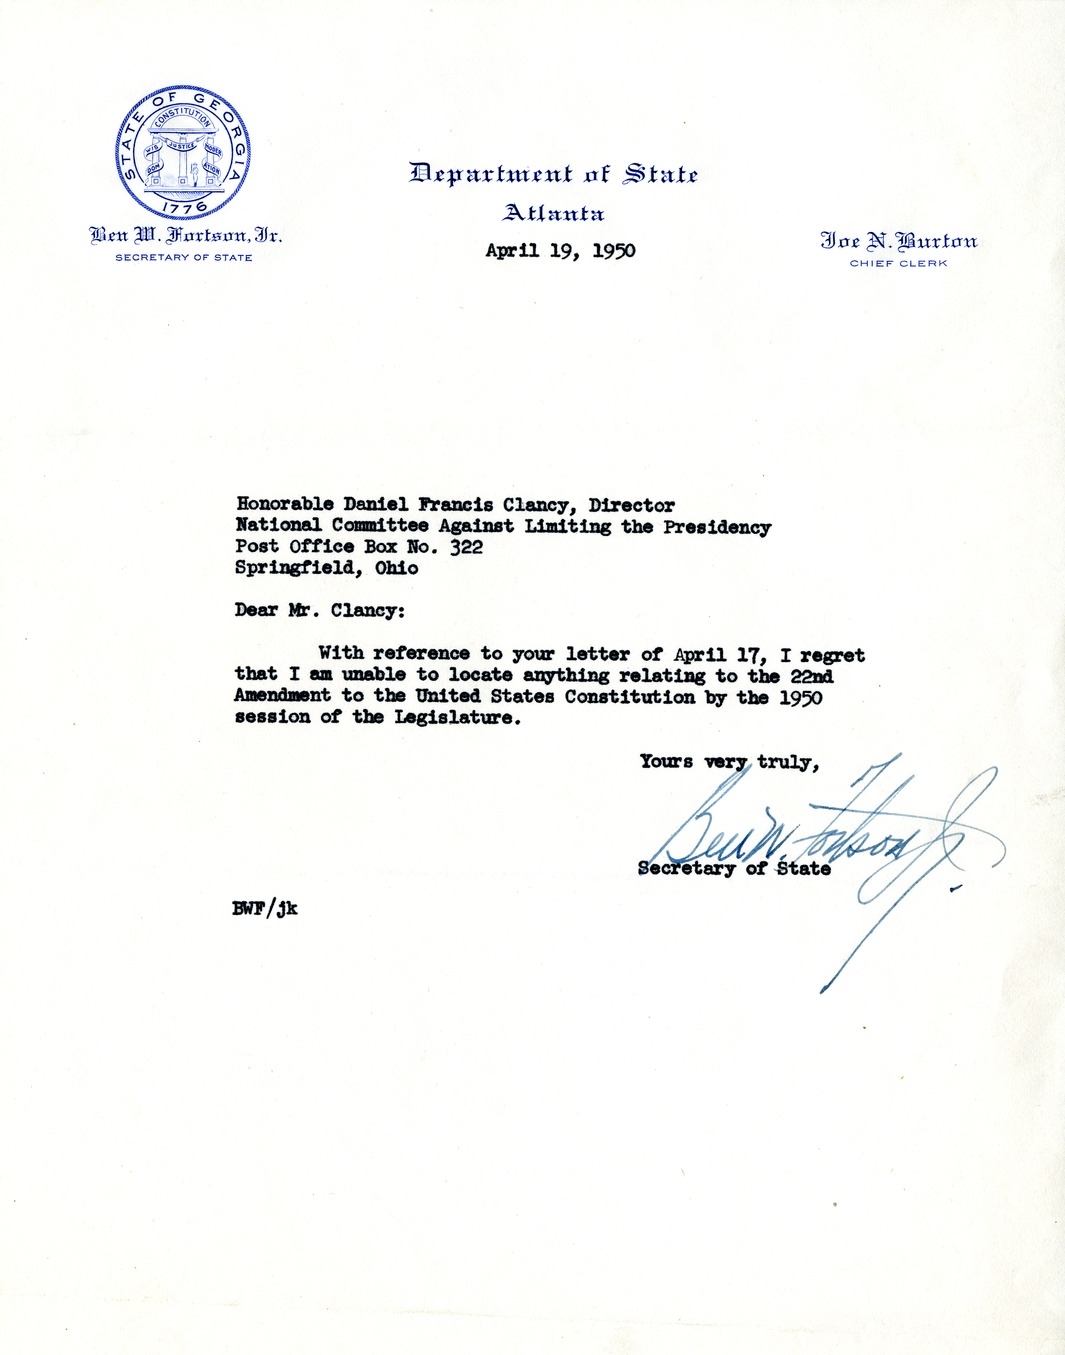 Letter from Benjamin W. Fortson, Jr. to Daniel F. Clancy